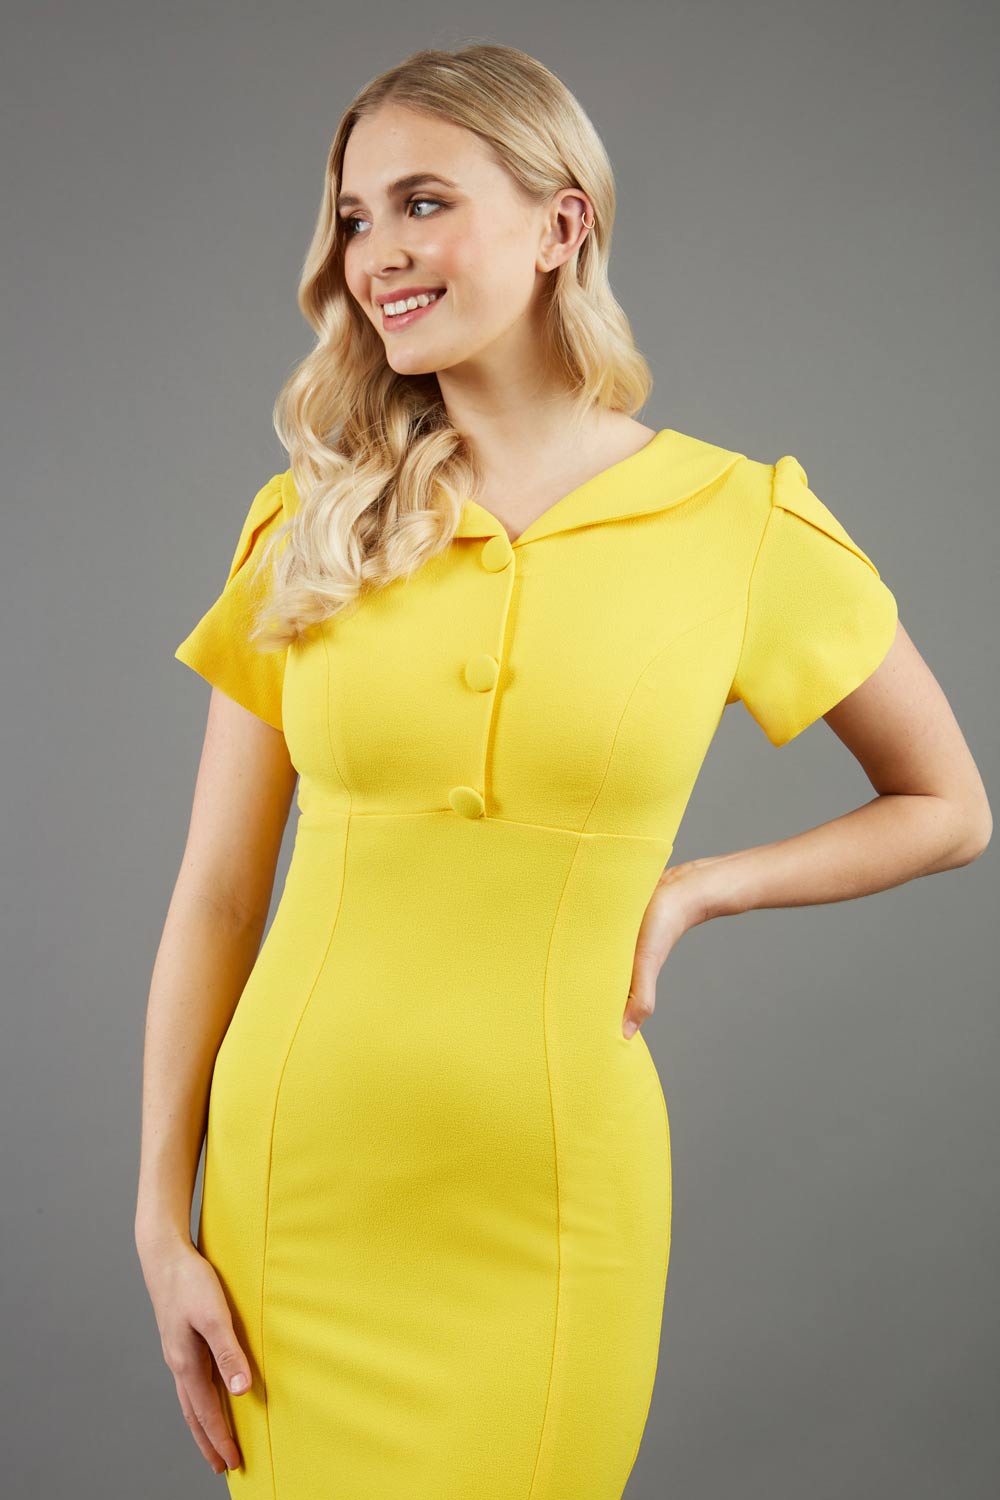 Short puffed sleeve peter pan collar button pencil dress by diva catwalk in yellow